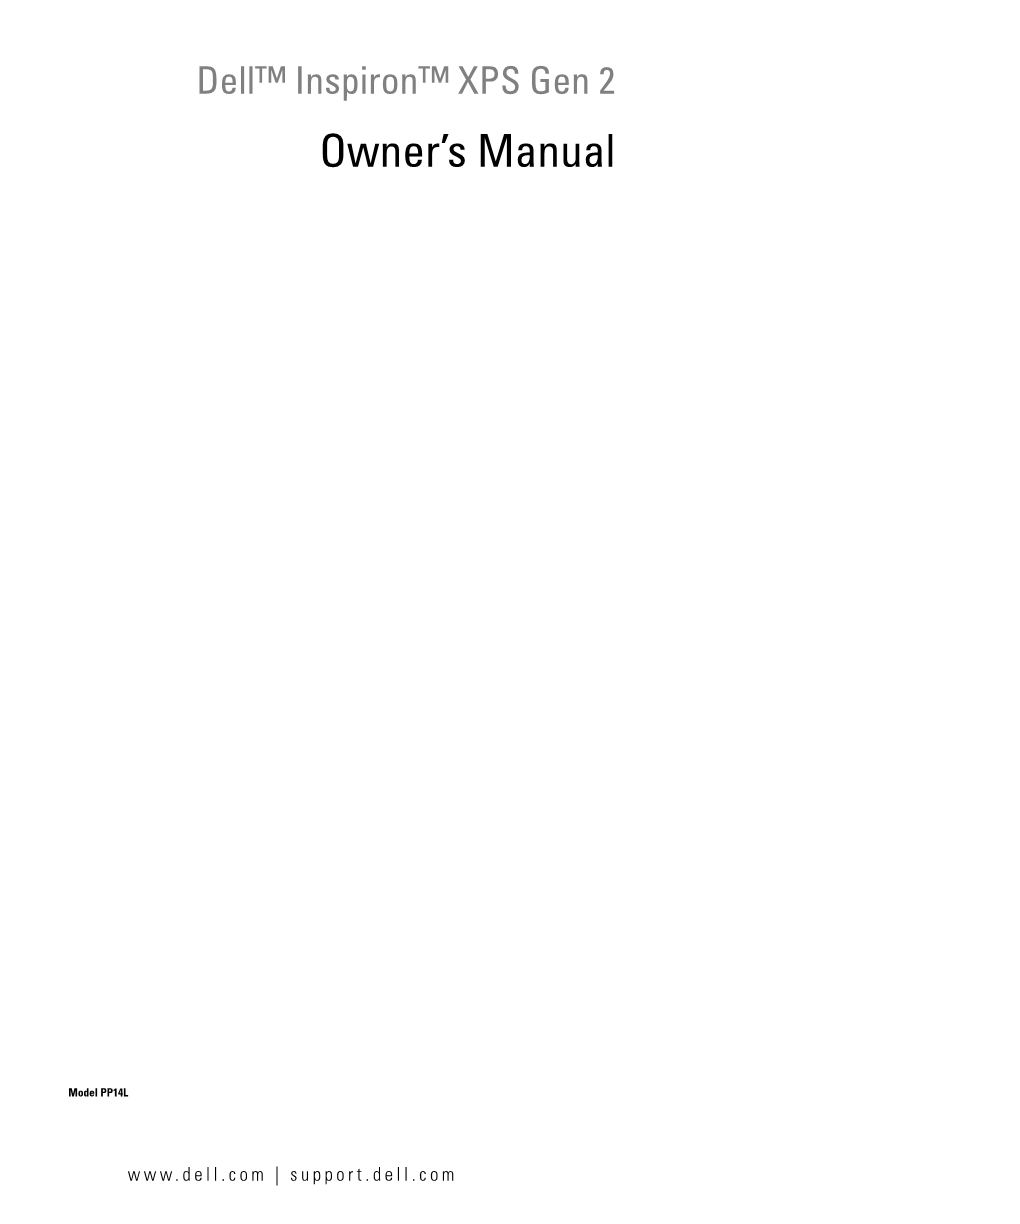 Inspiron XPS Gen 2 Owner's Manual